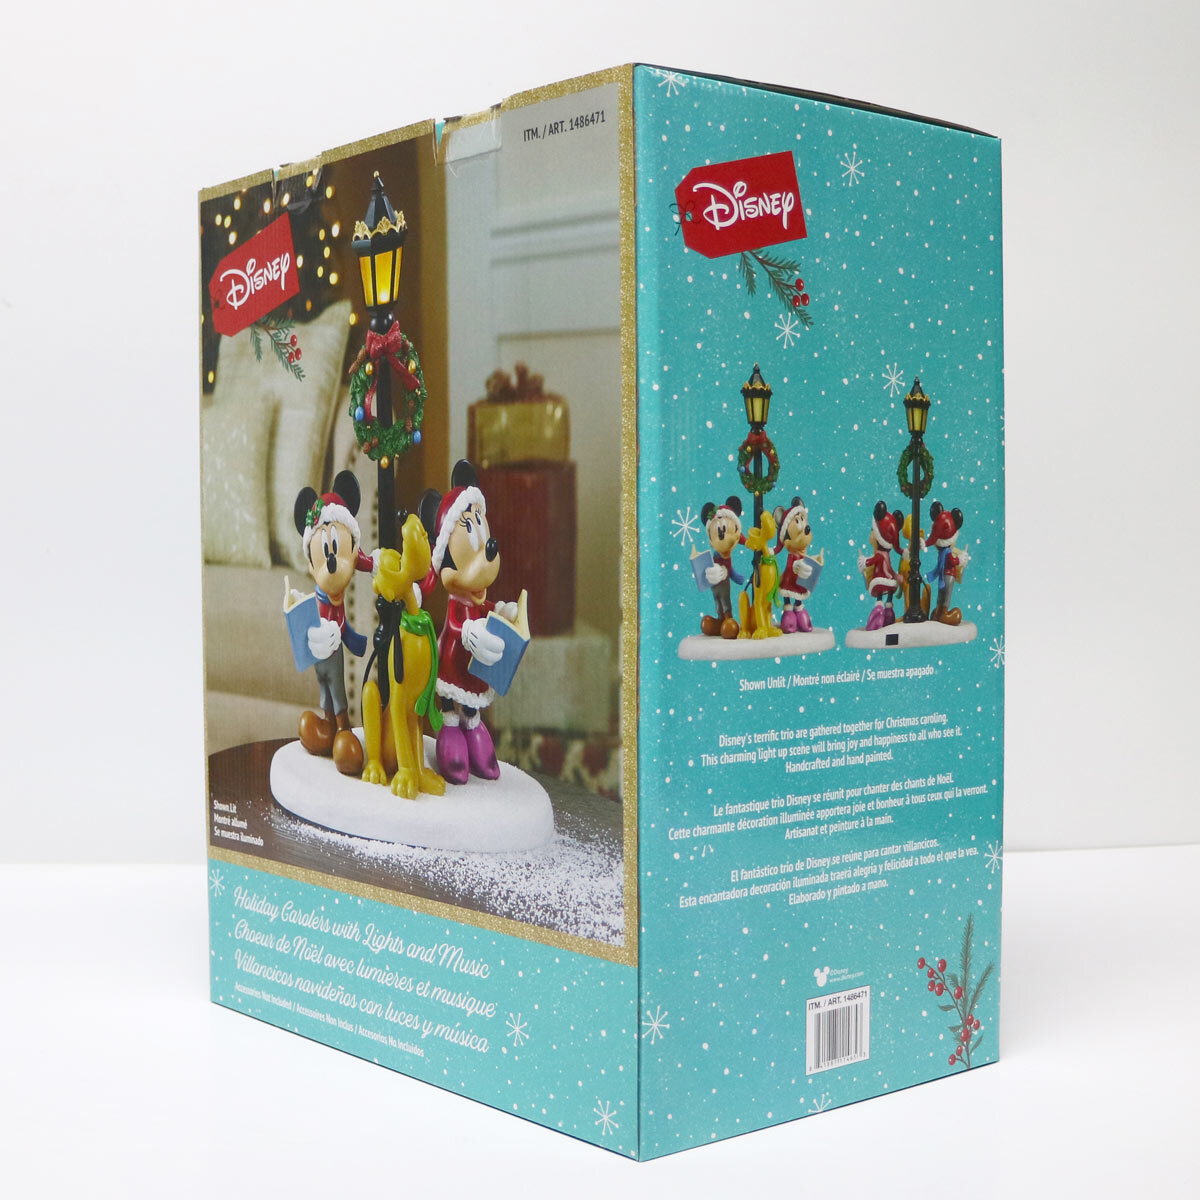 Buy Disney Christmas Caroler TableTop Box Image at Costco.co.uk